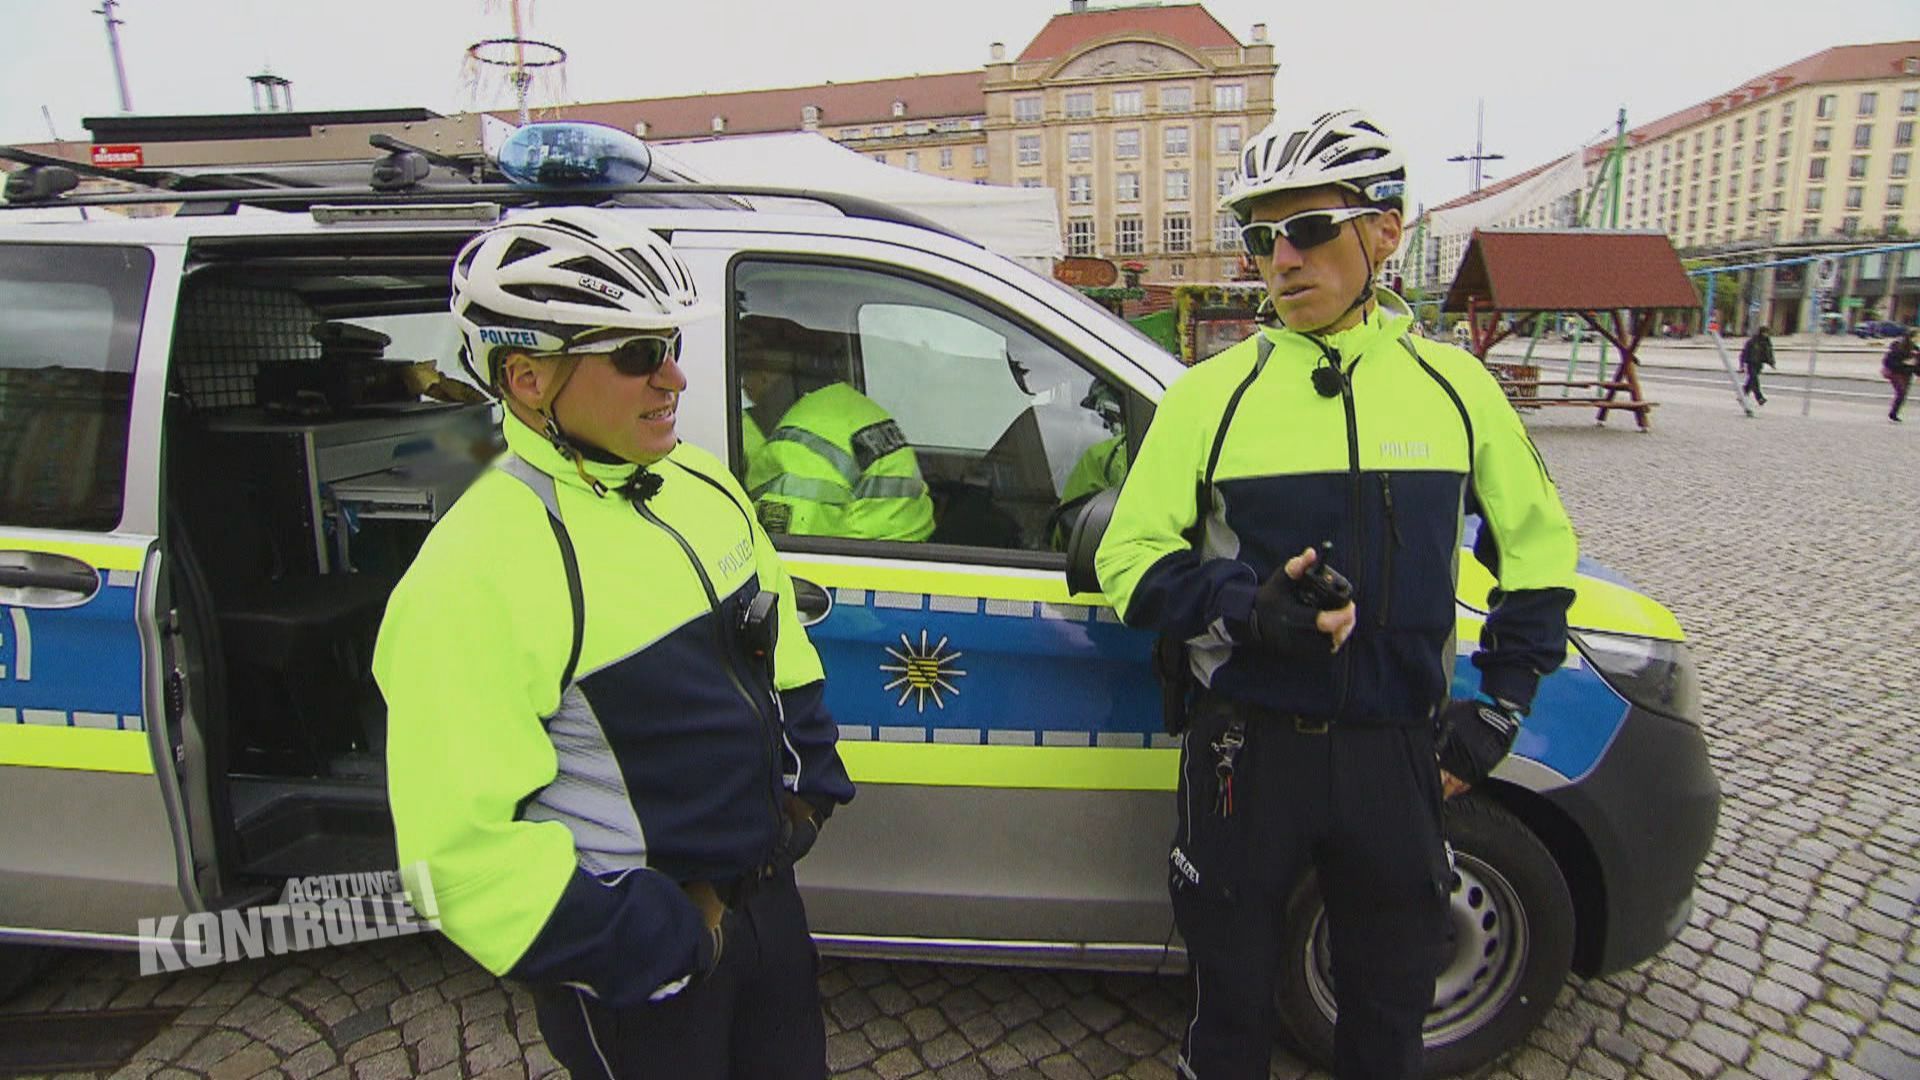 Thema u. a.: Fahrradpolizei Dresden